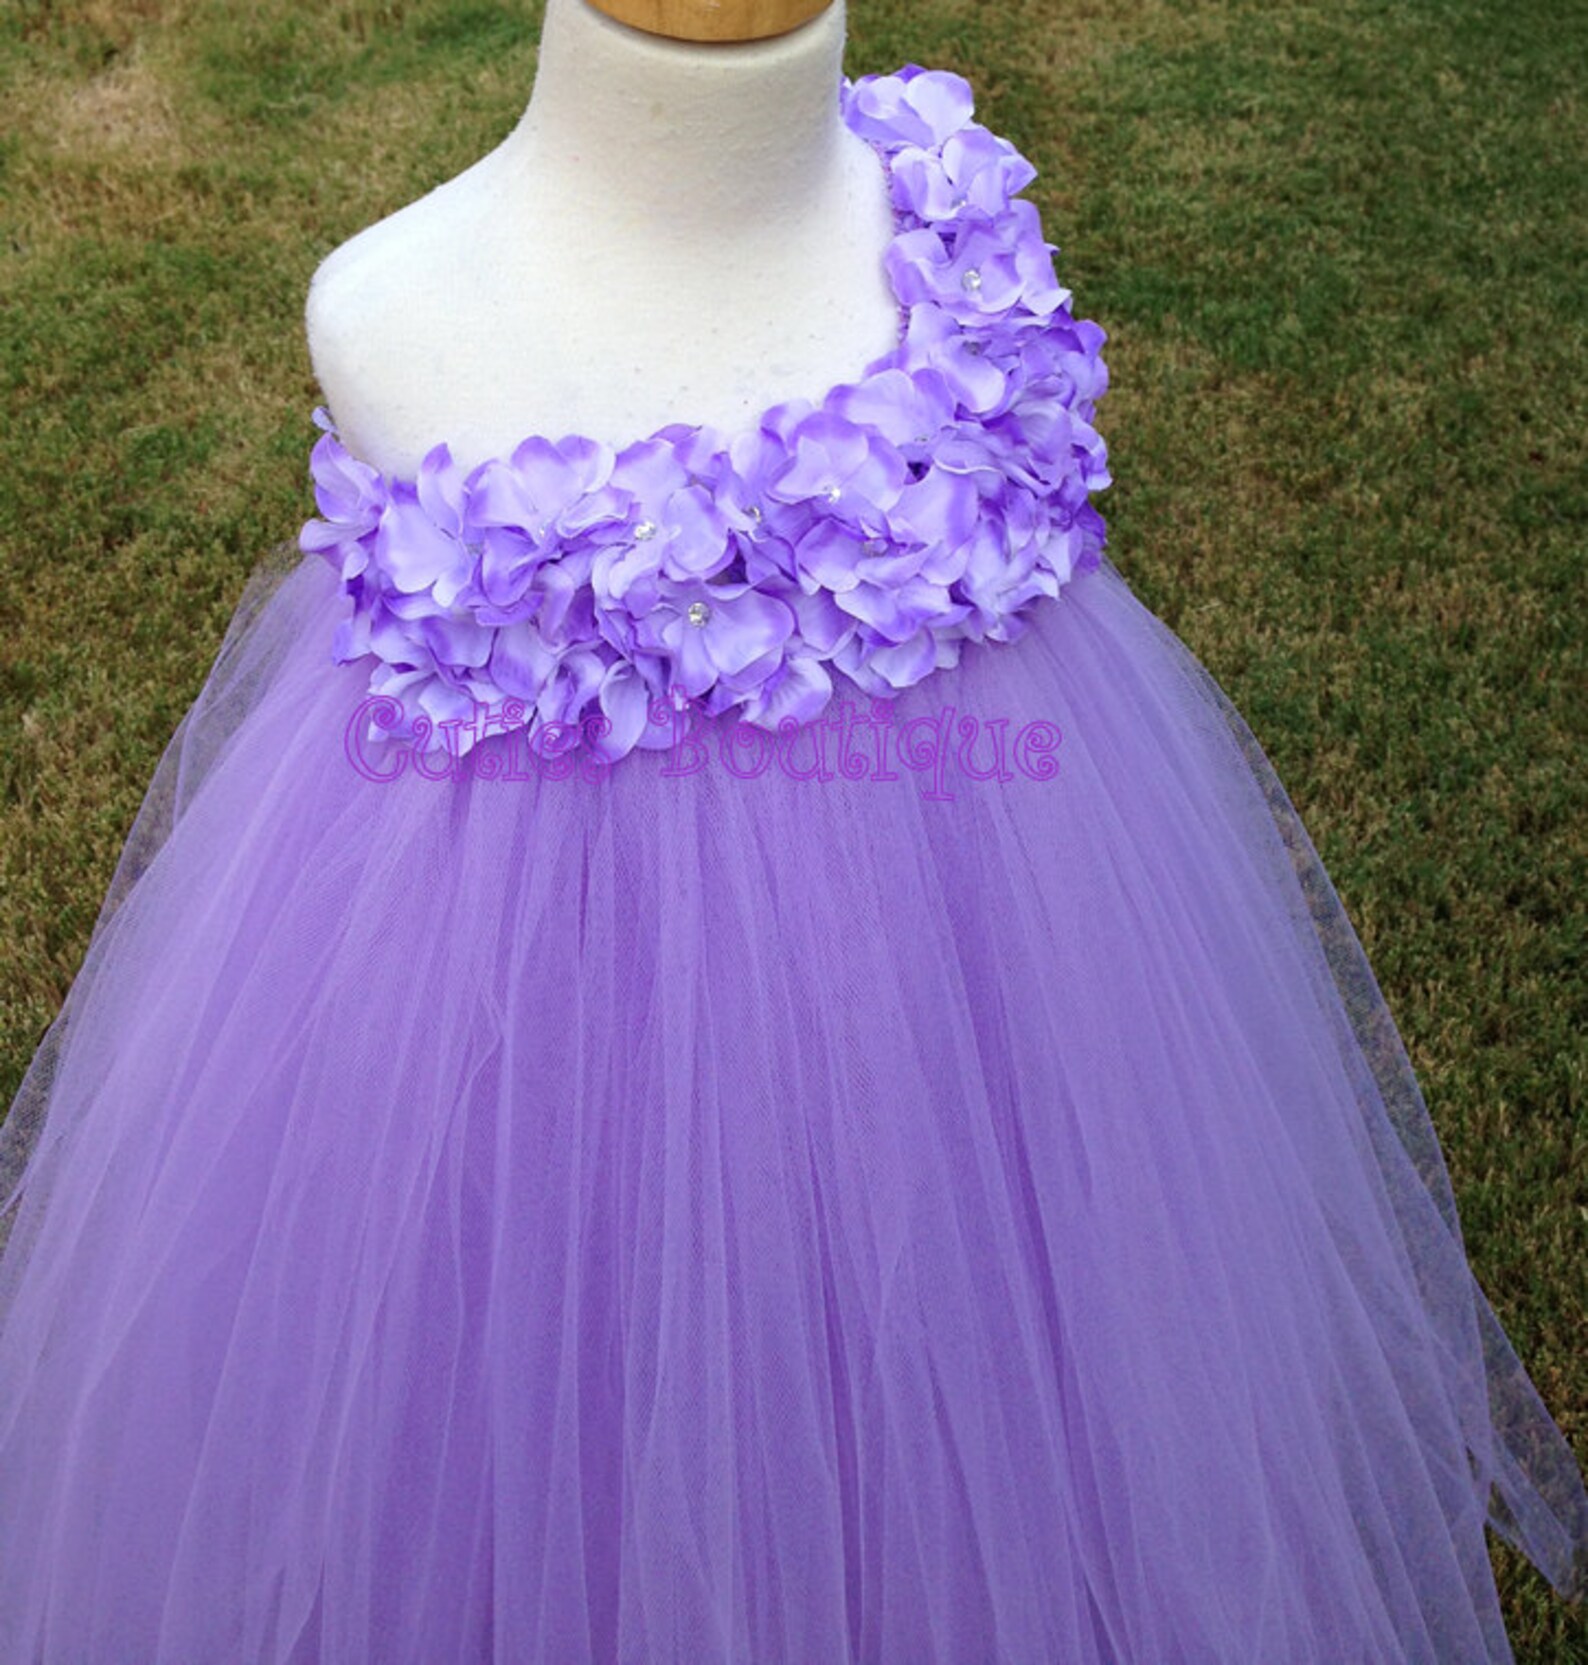 Lilac Hydrangea Flower Dress Wedding Dress Birthday Picture | Etsy